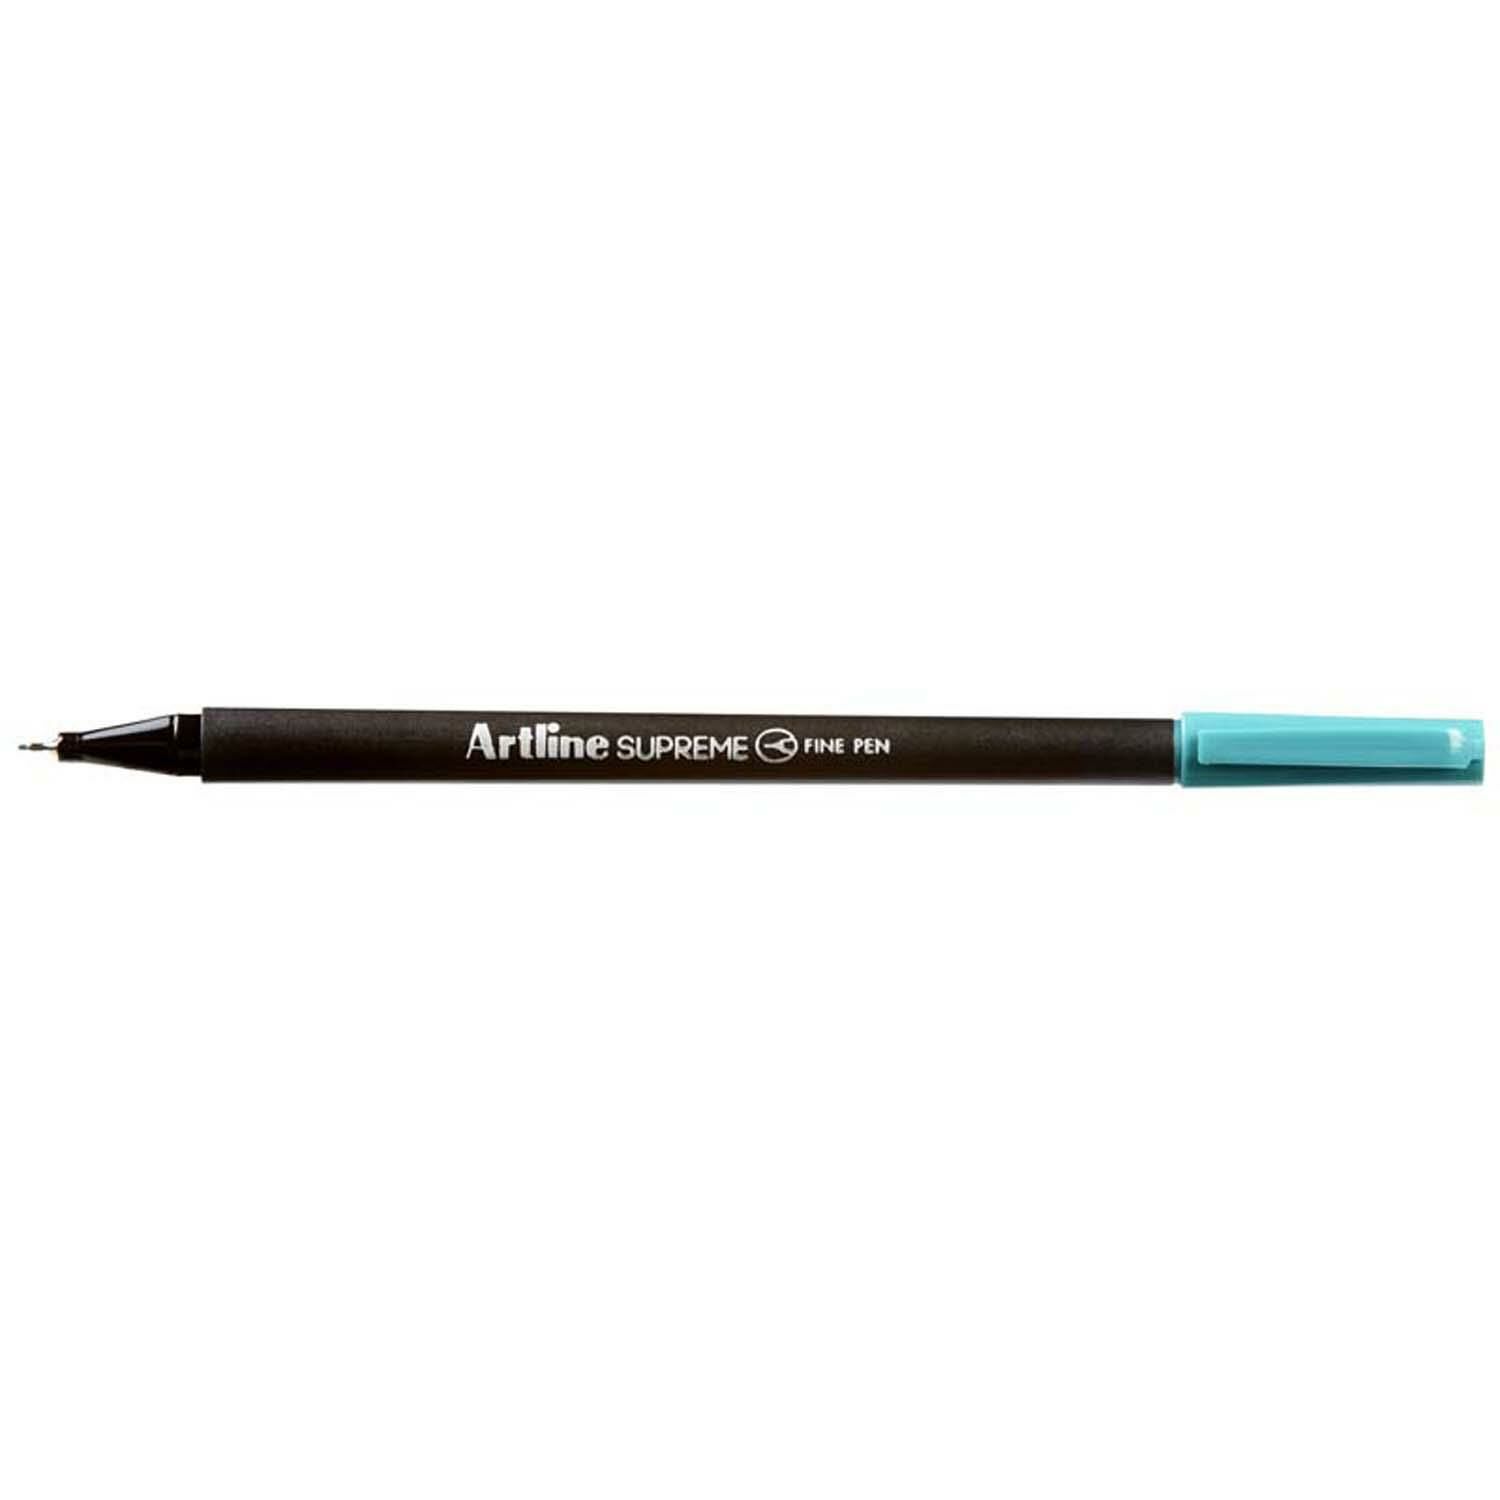 Artlıne Supreme Epfs-200 Fıne Pen